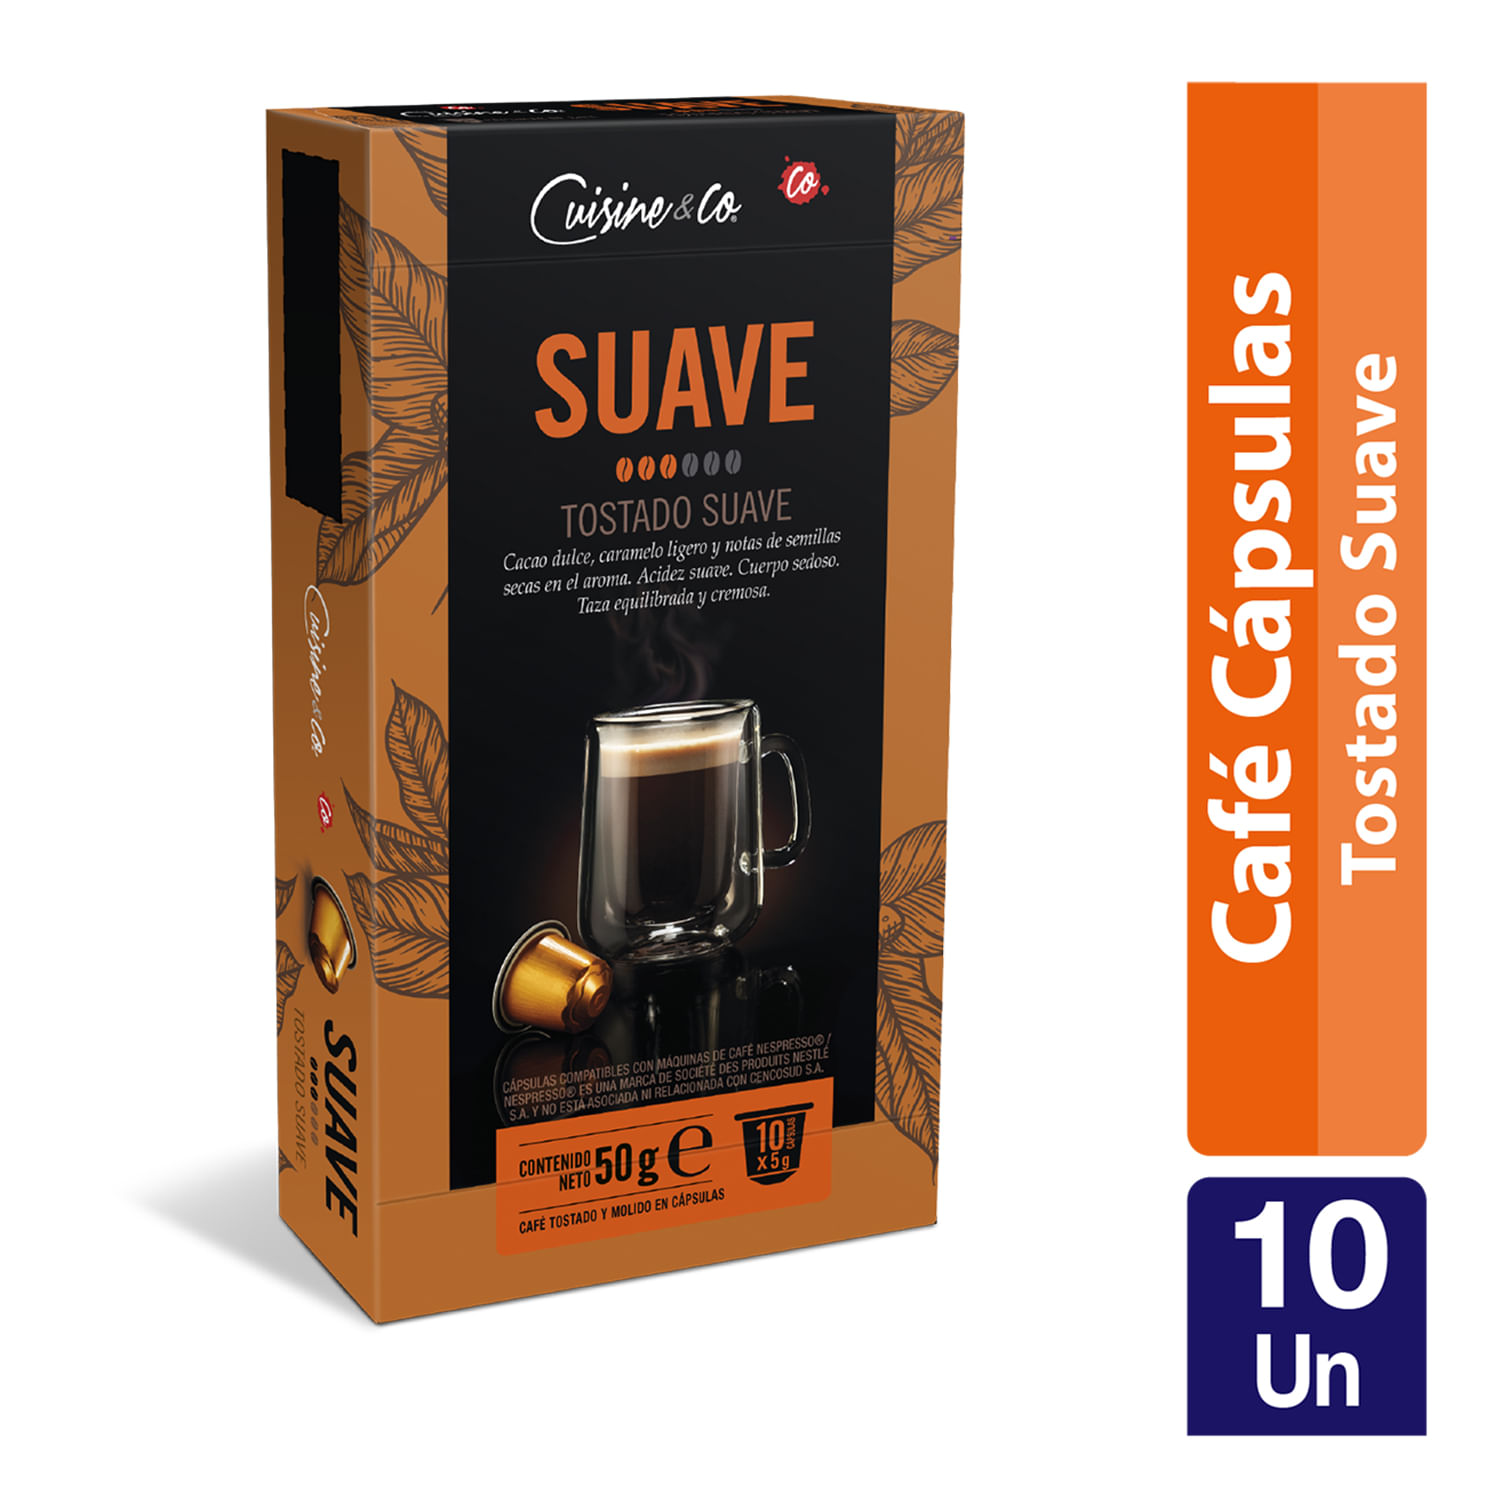 Café Royal - 16 Capsules Nescafe® Dolce Gusto compatibles